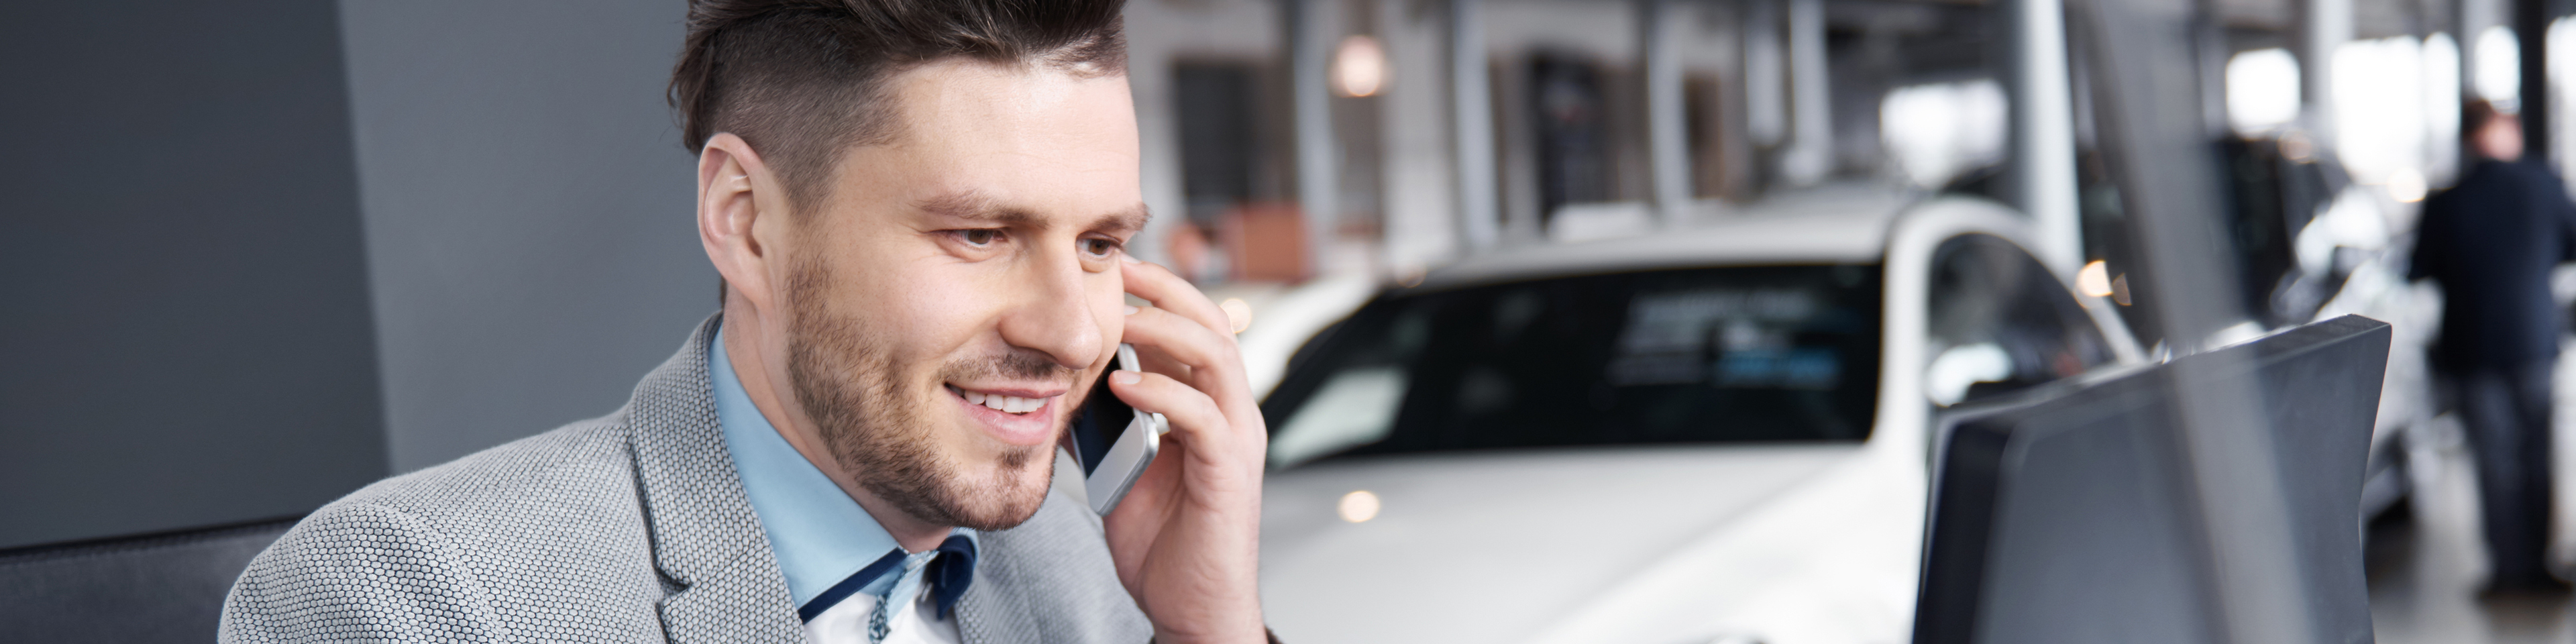 Man on phone and laptop at car dealership